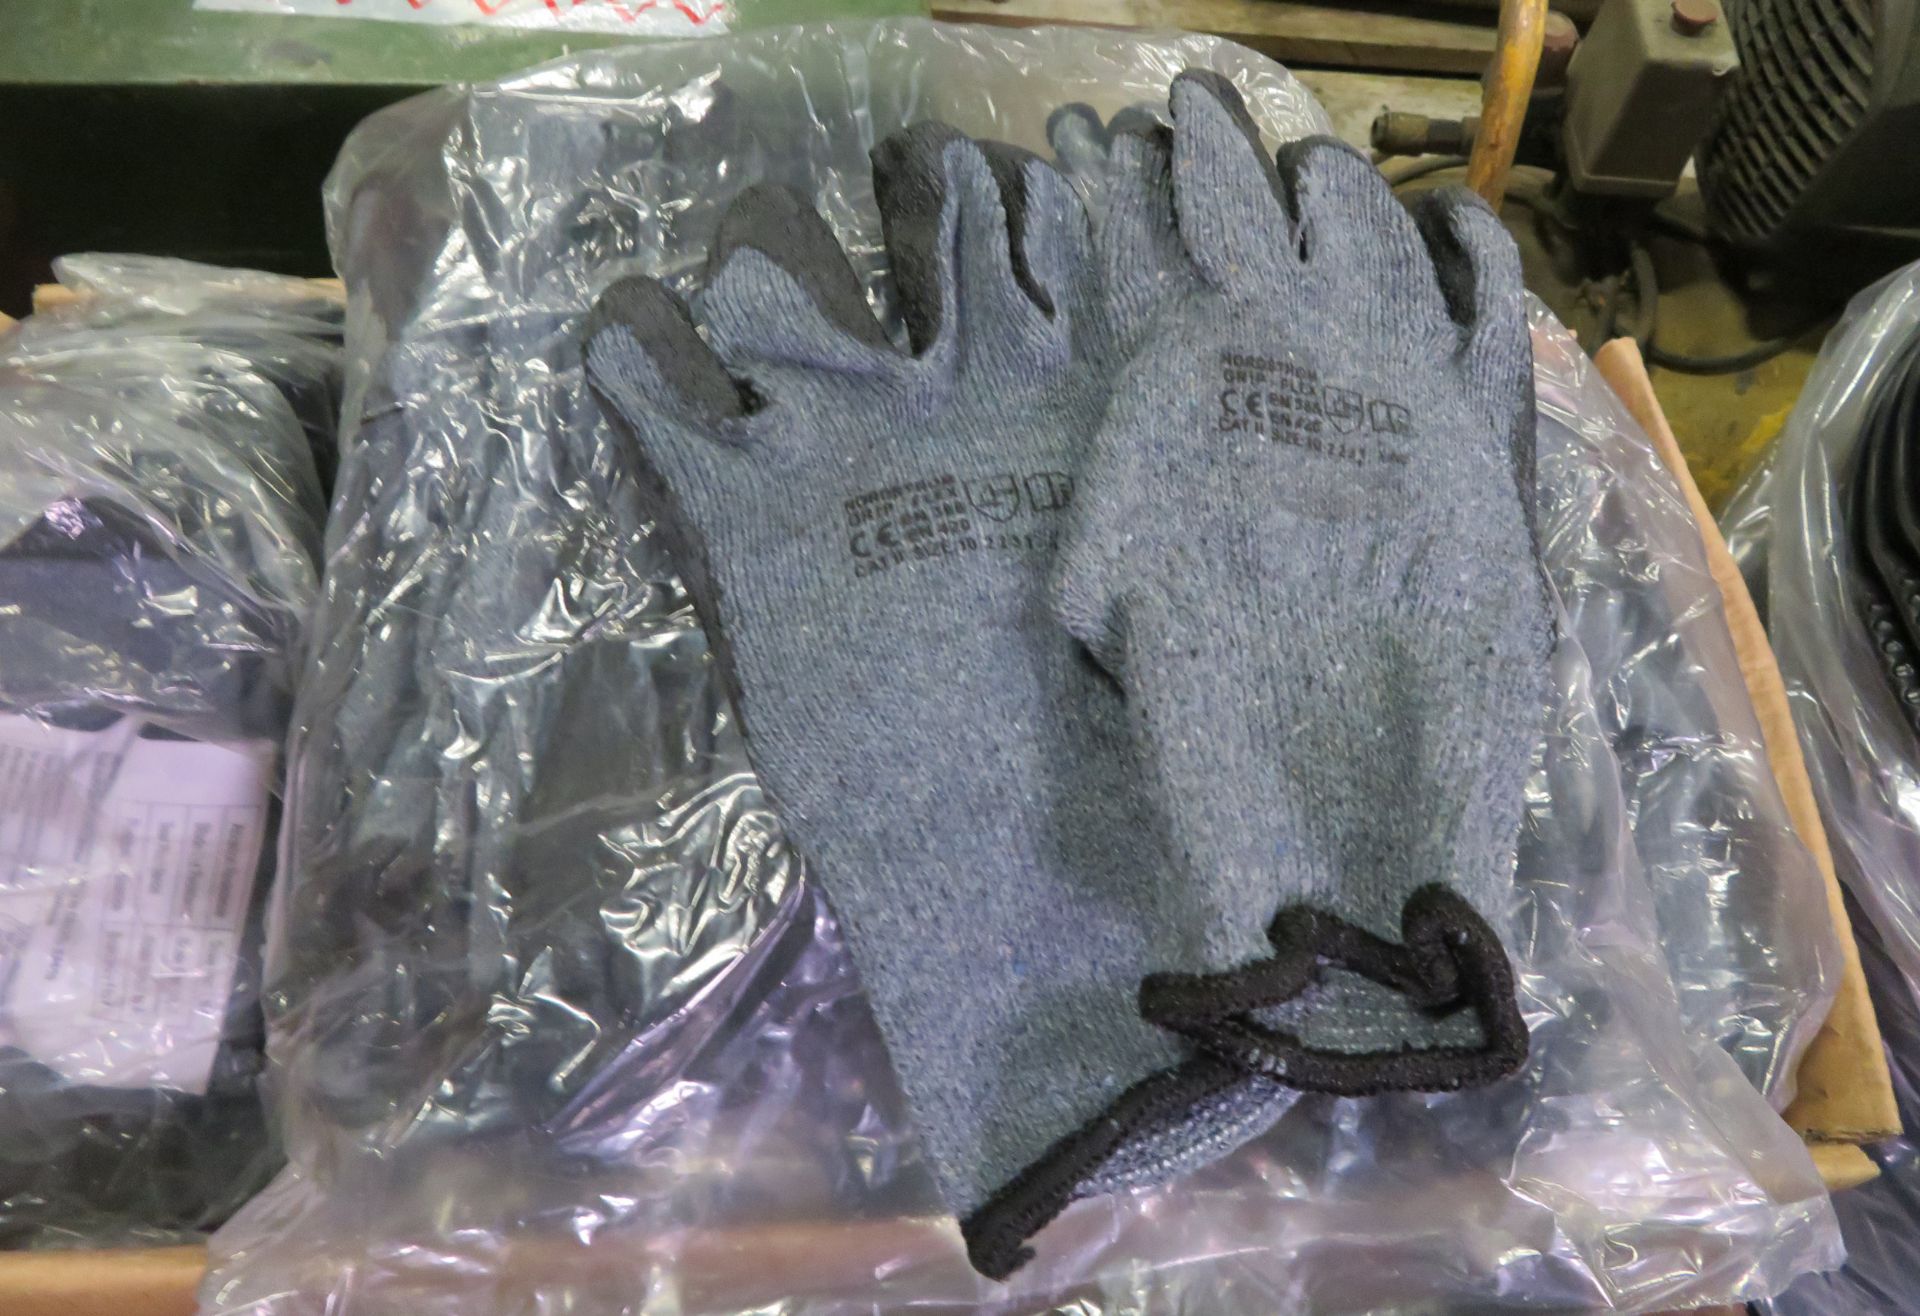 Nordstrom Grip Flex Work Gloves - black & grey - size 10 - 120 pairs - Image 2 of 2